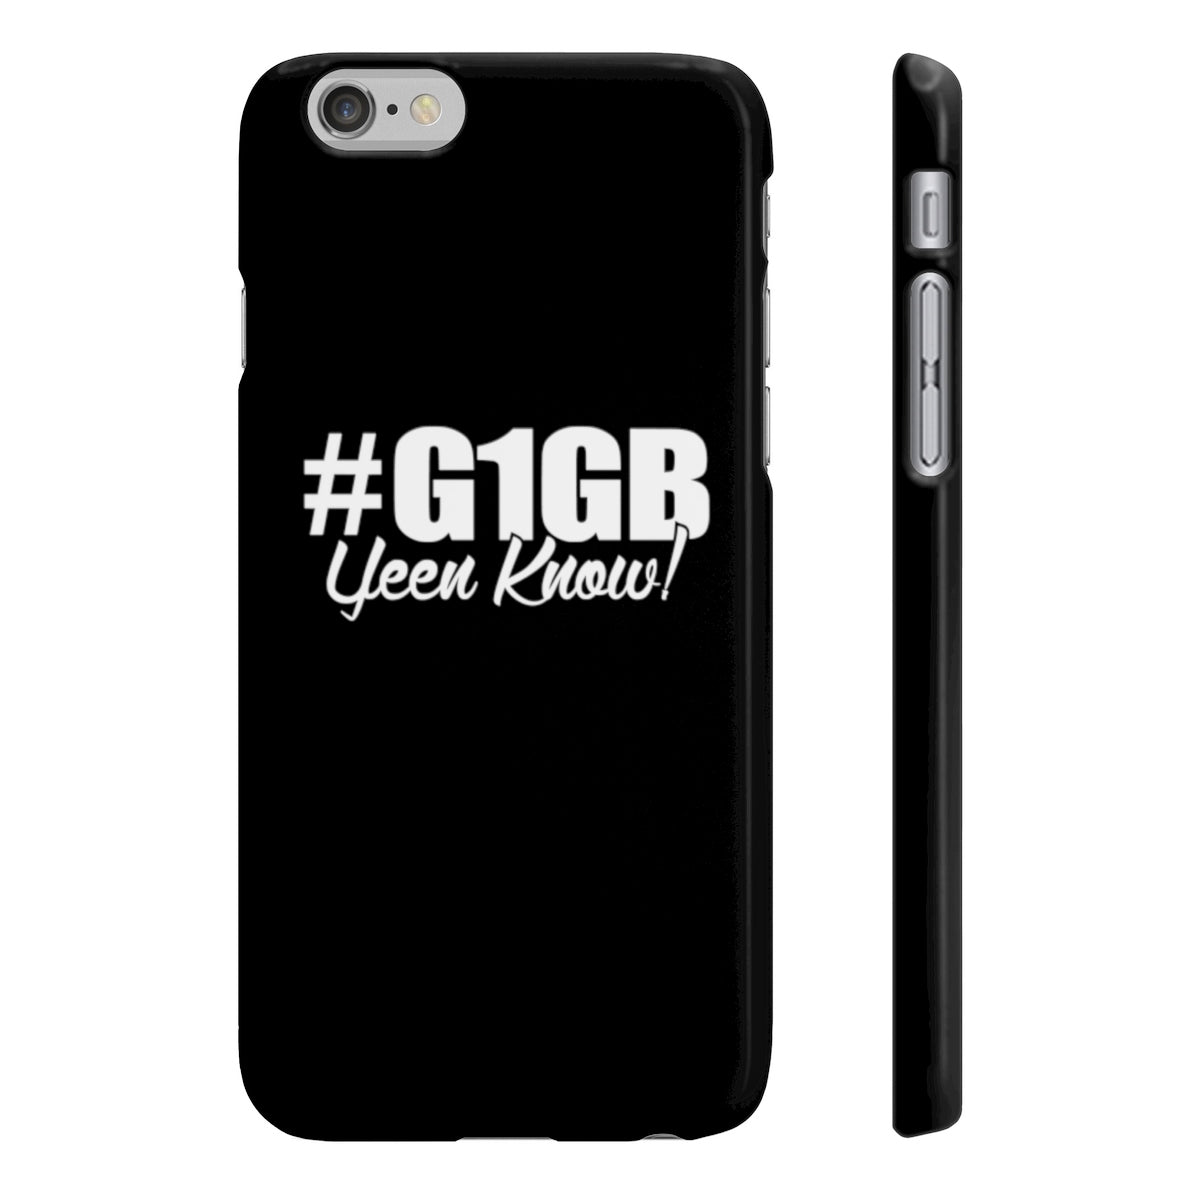 Black #G1GB Phone Case